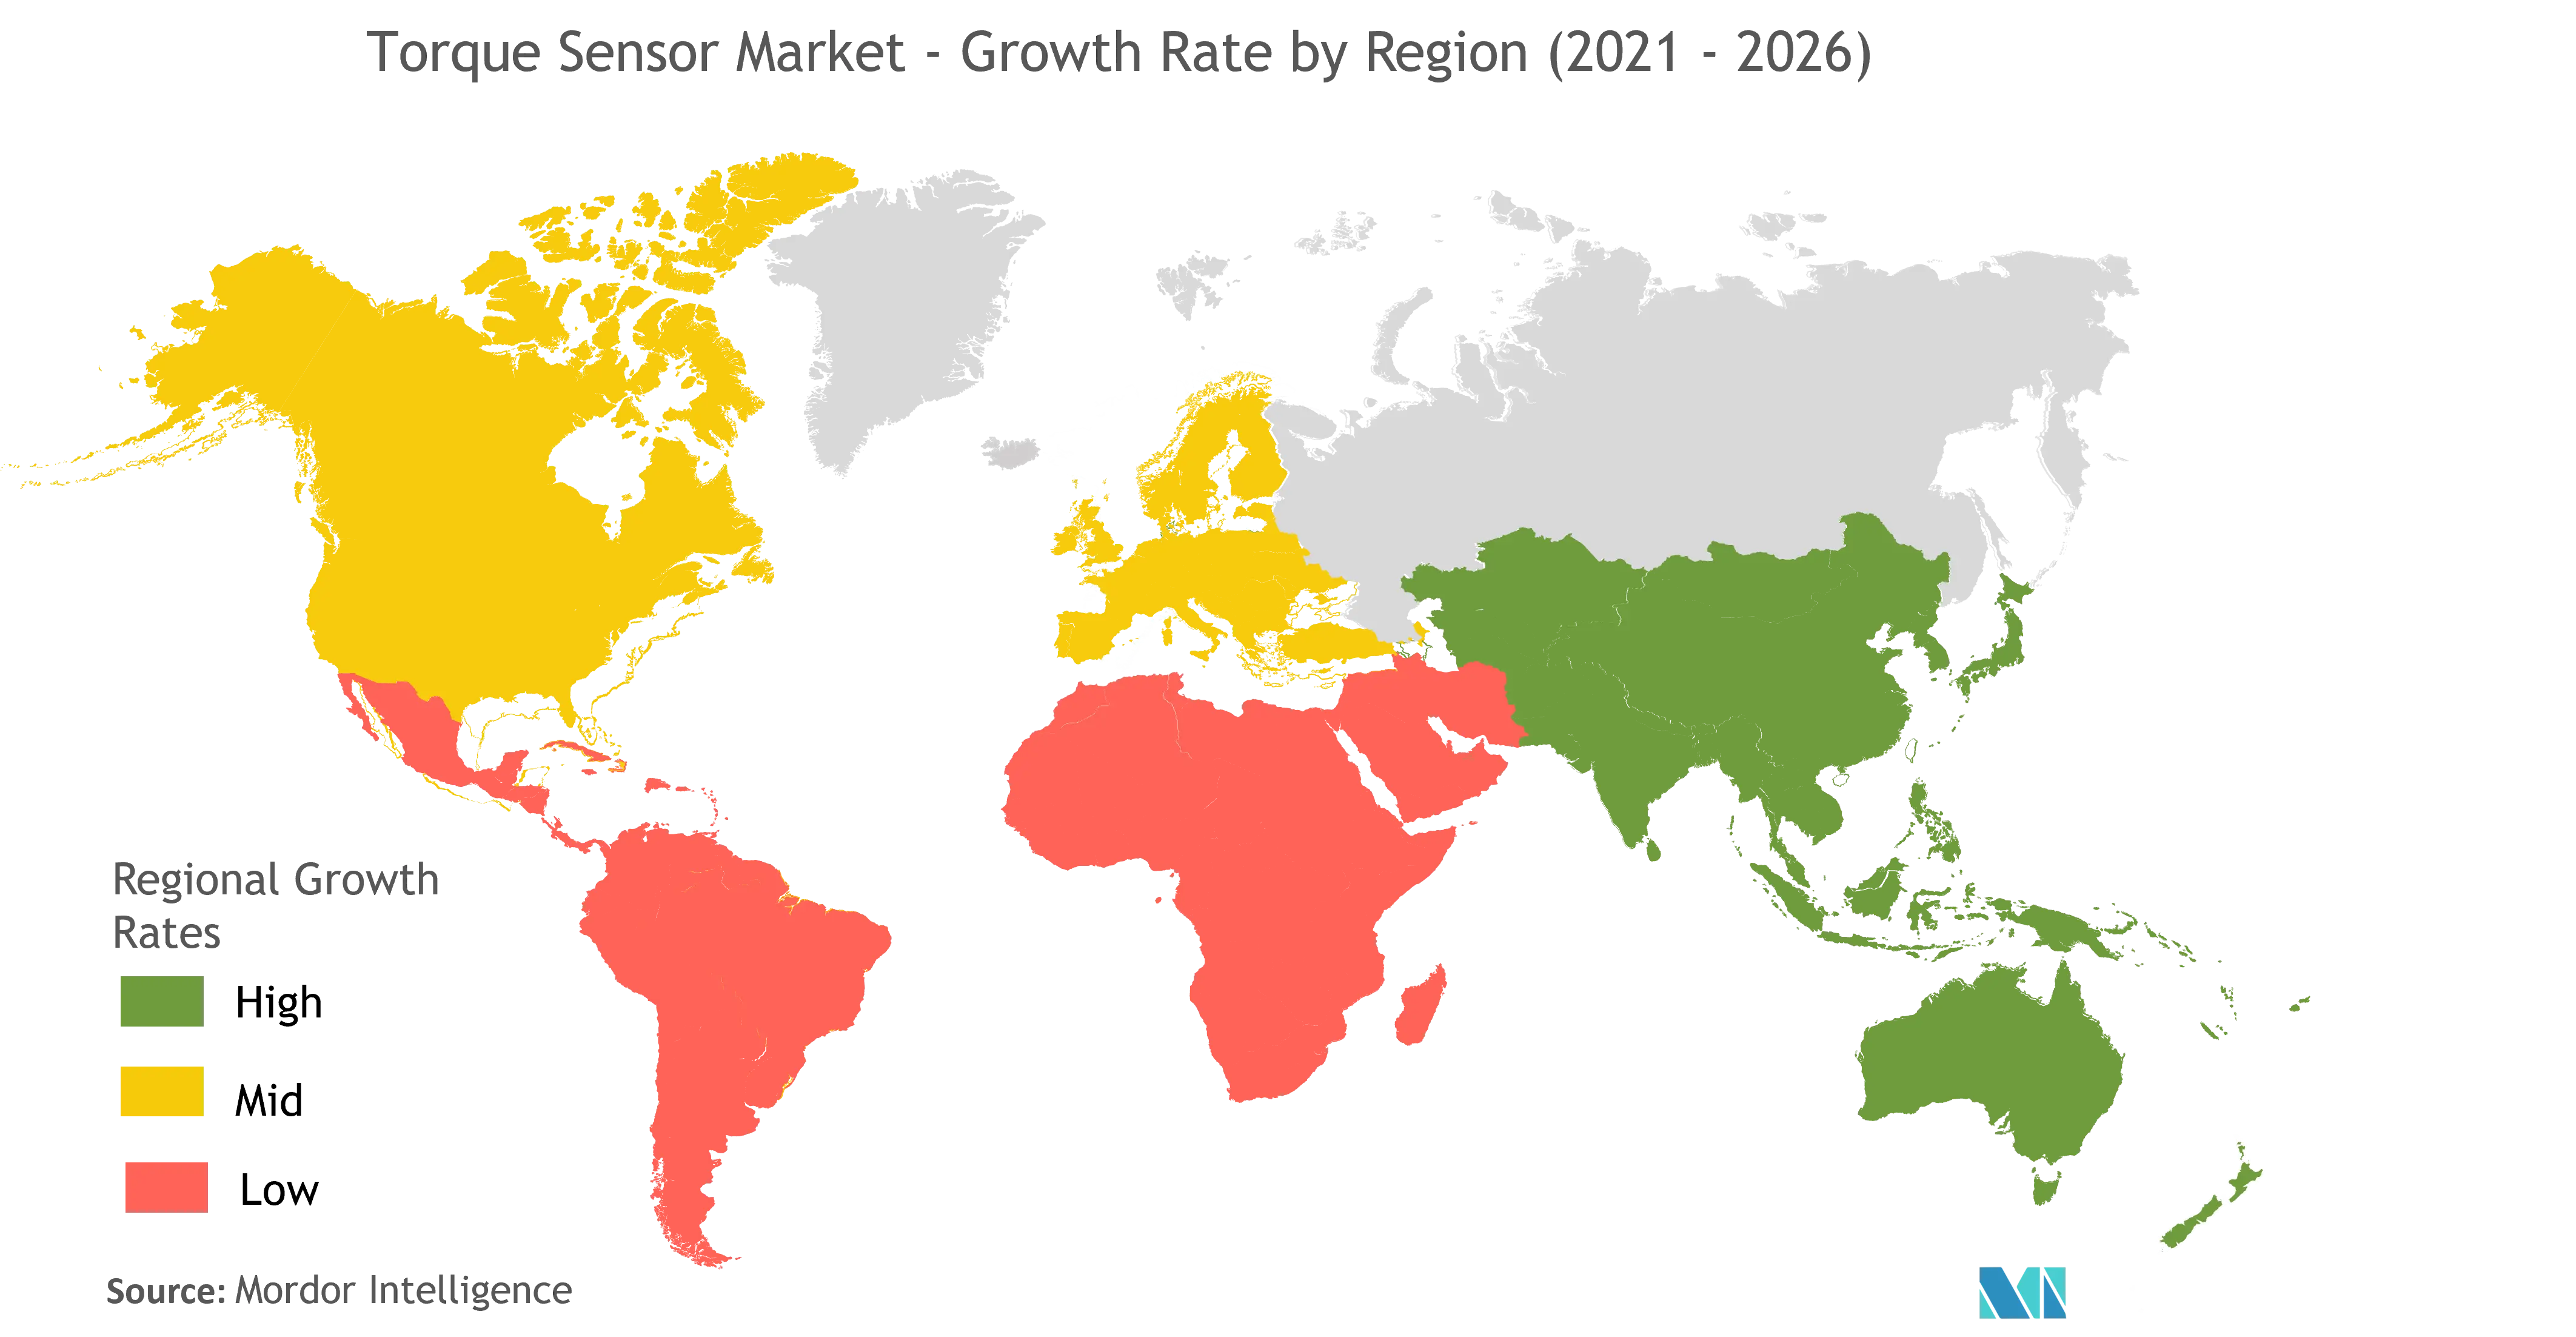 Torque Sensor Market - Growth Rate by Region (2021 - 2026)